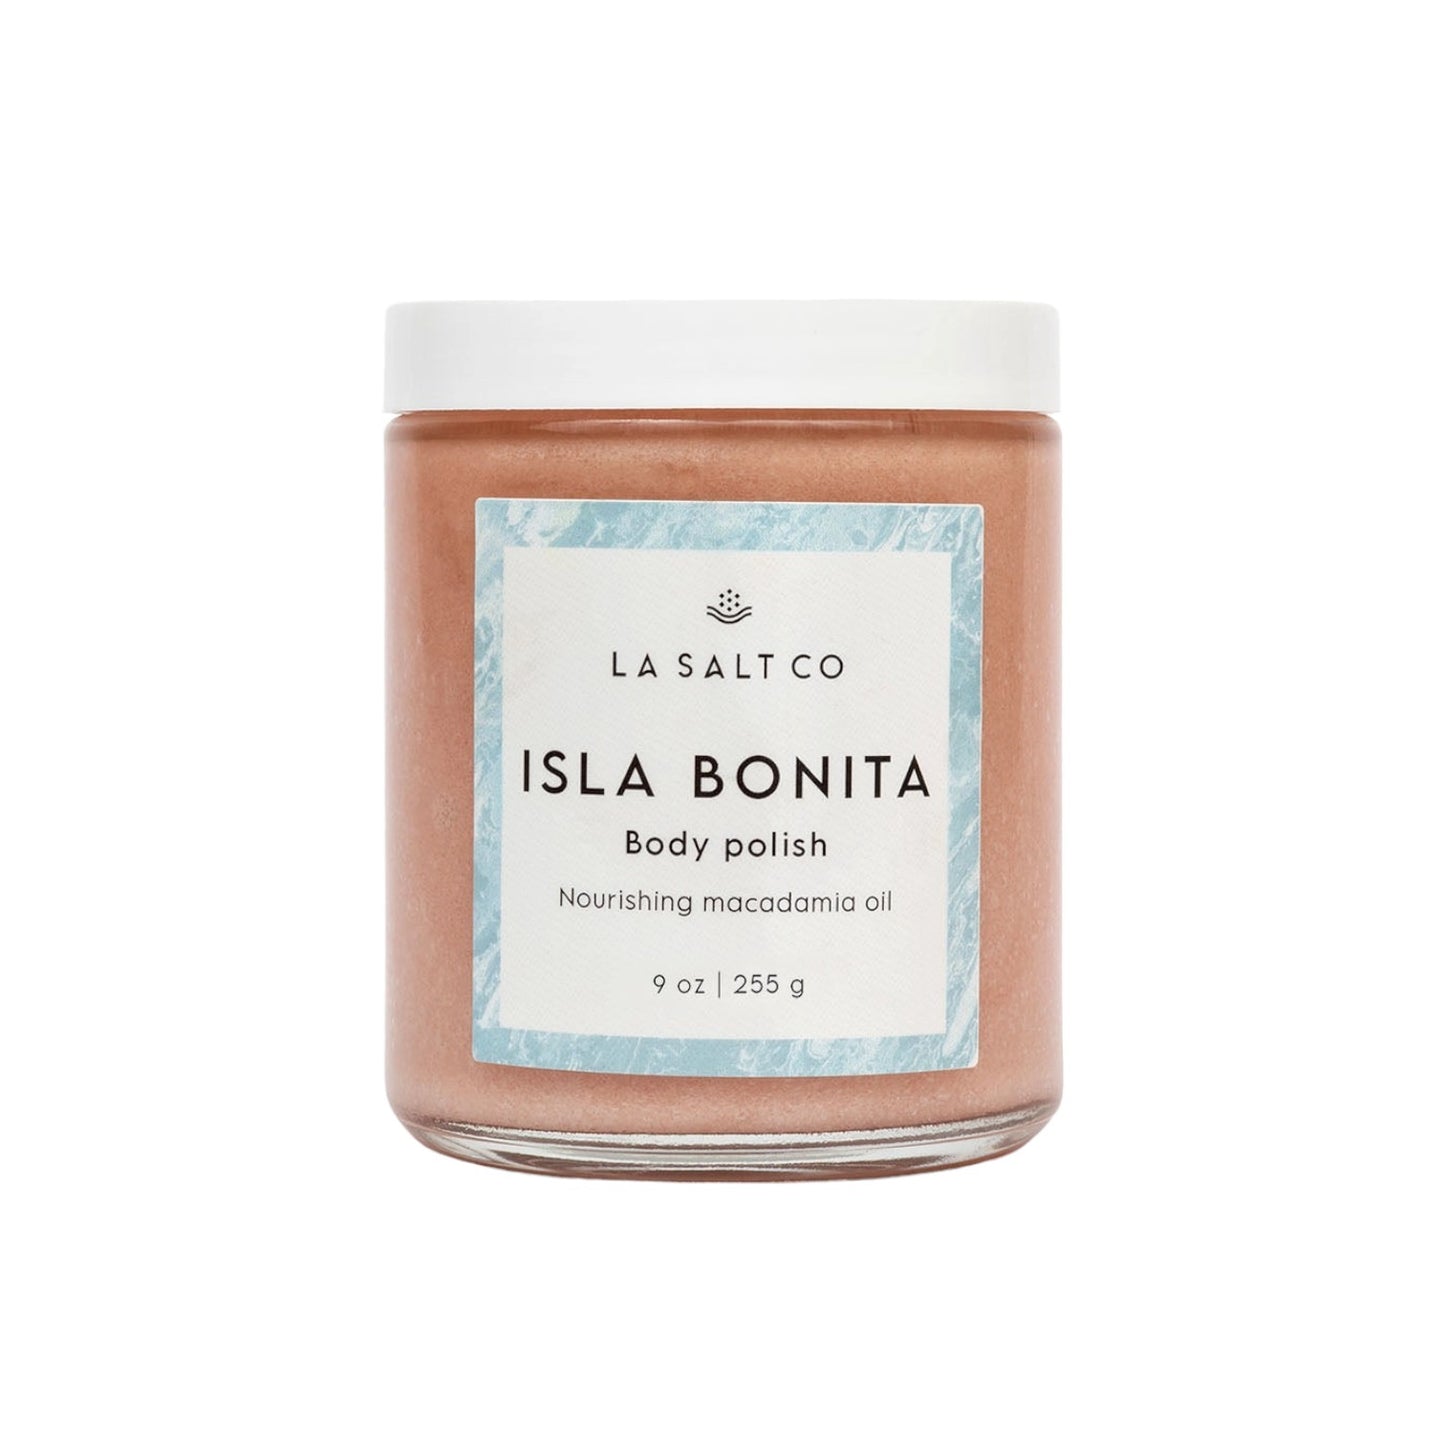 9 oz glass jar of Isla Bonita body polish from LA Salt Co